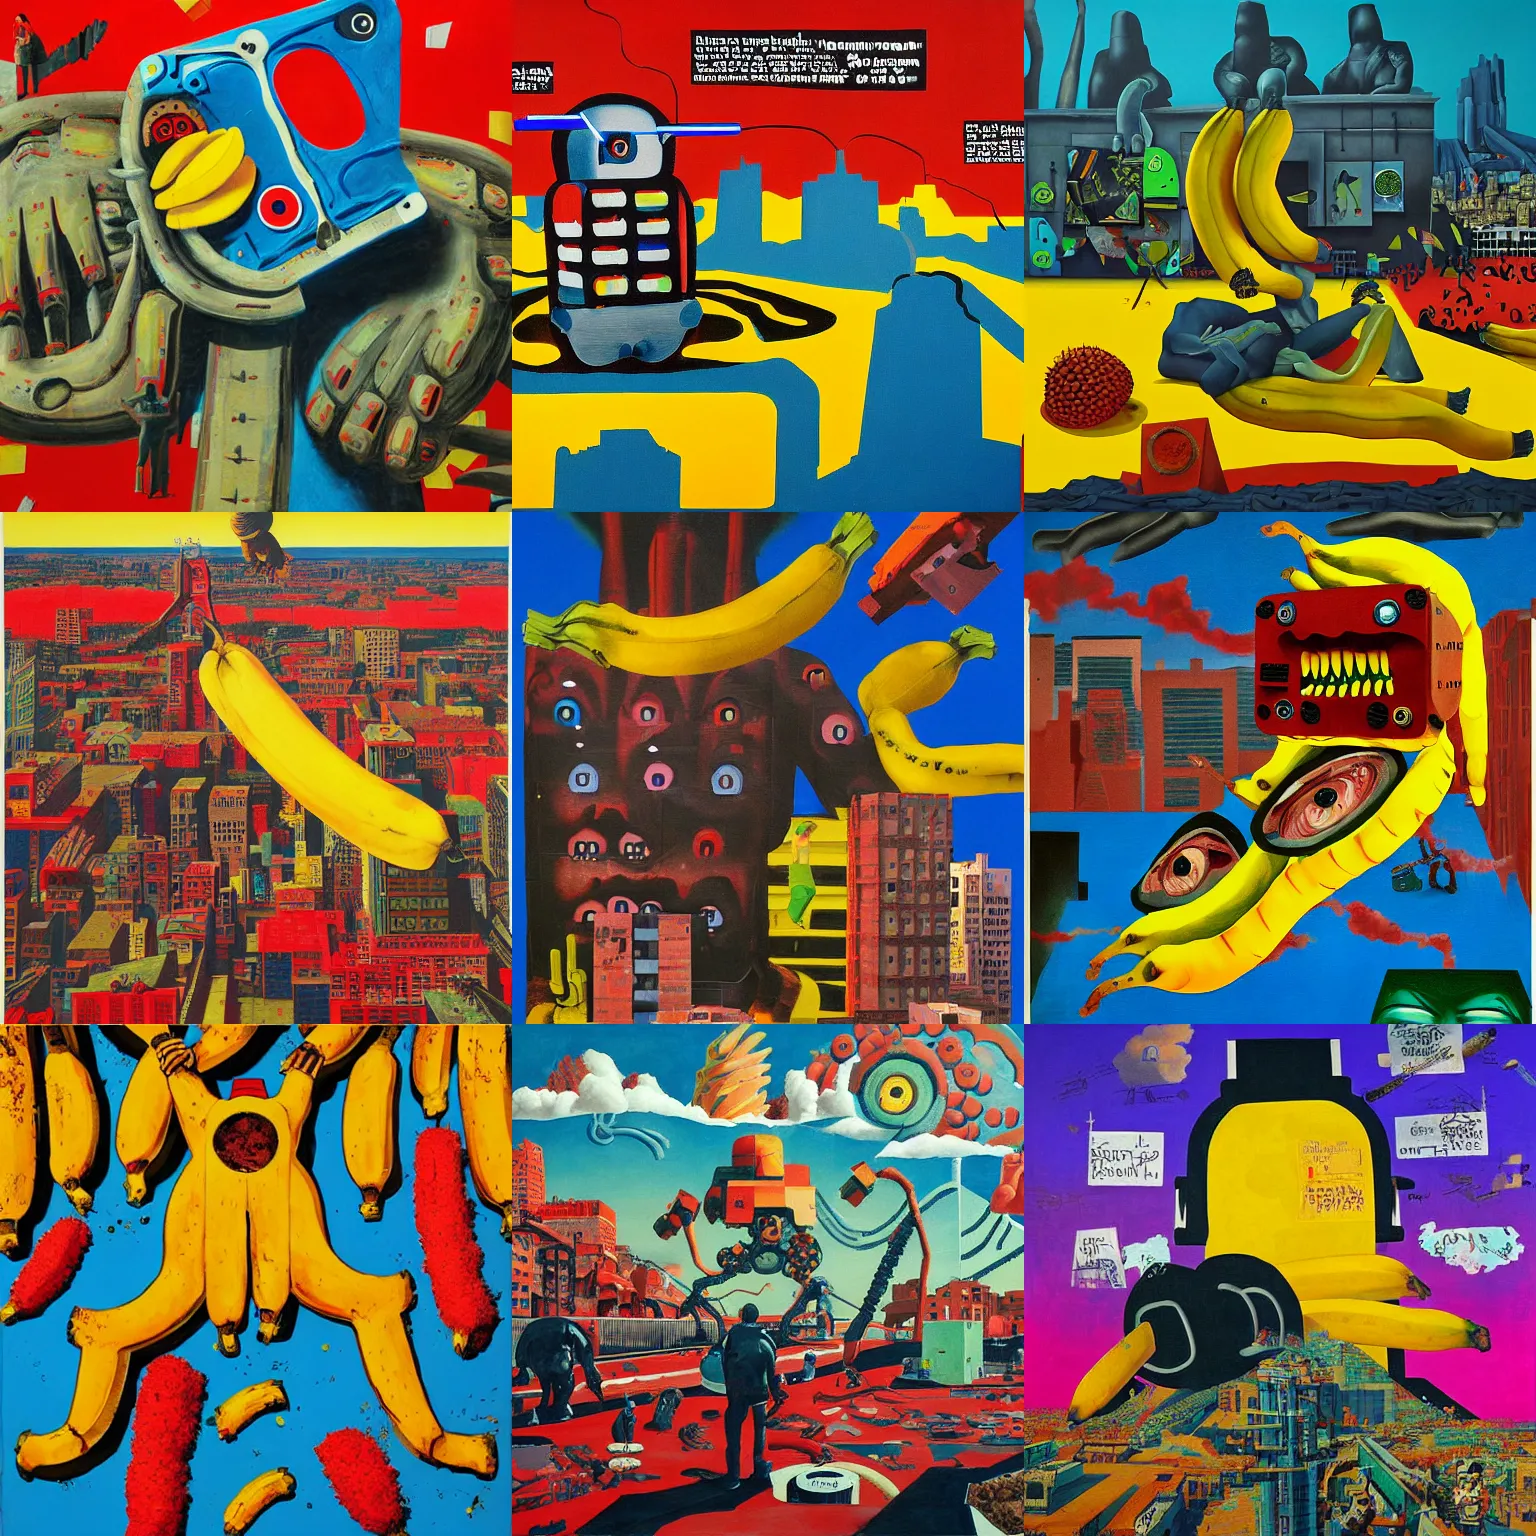 Prompt: giant robot slips on a banana, surrealist painting, dystopian art, poster art by david wojnarowicz, stuart davis